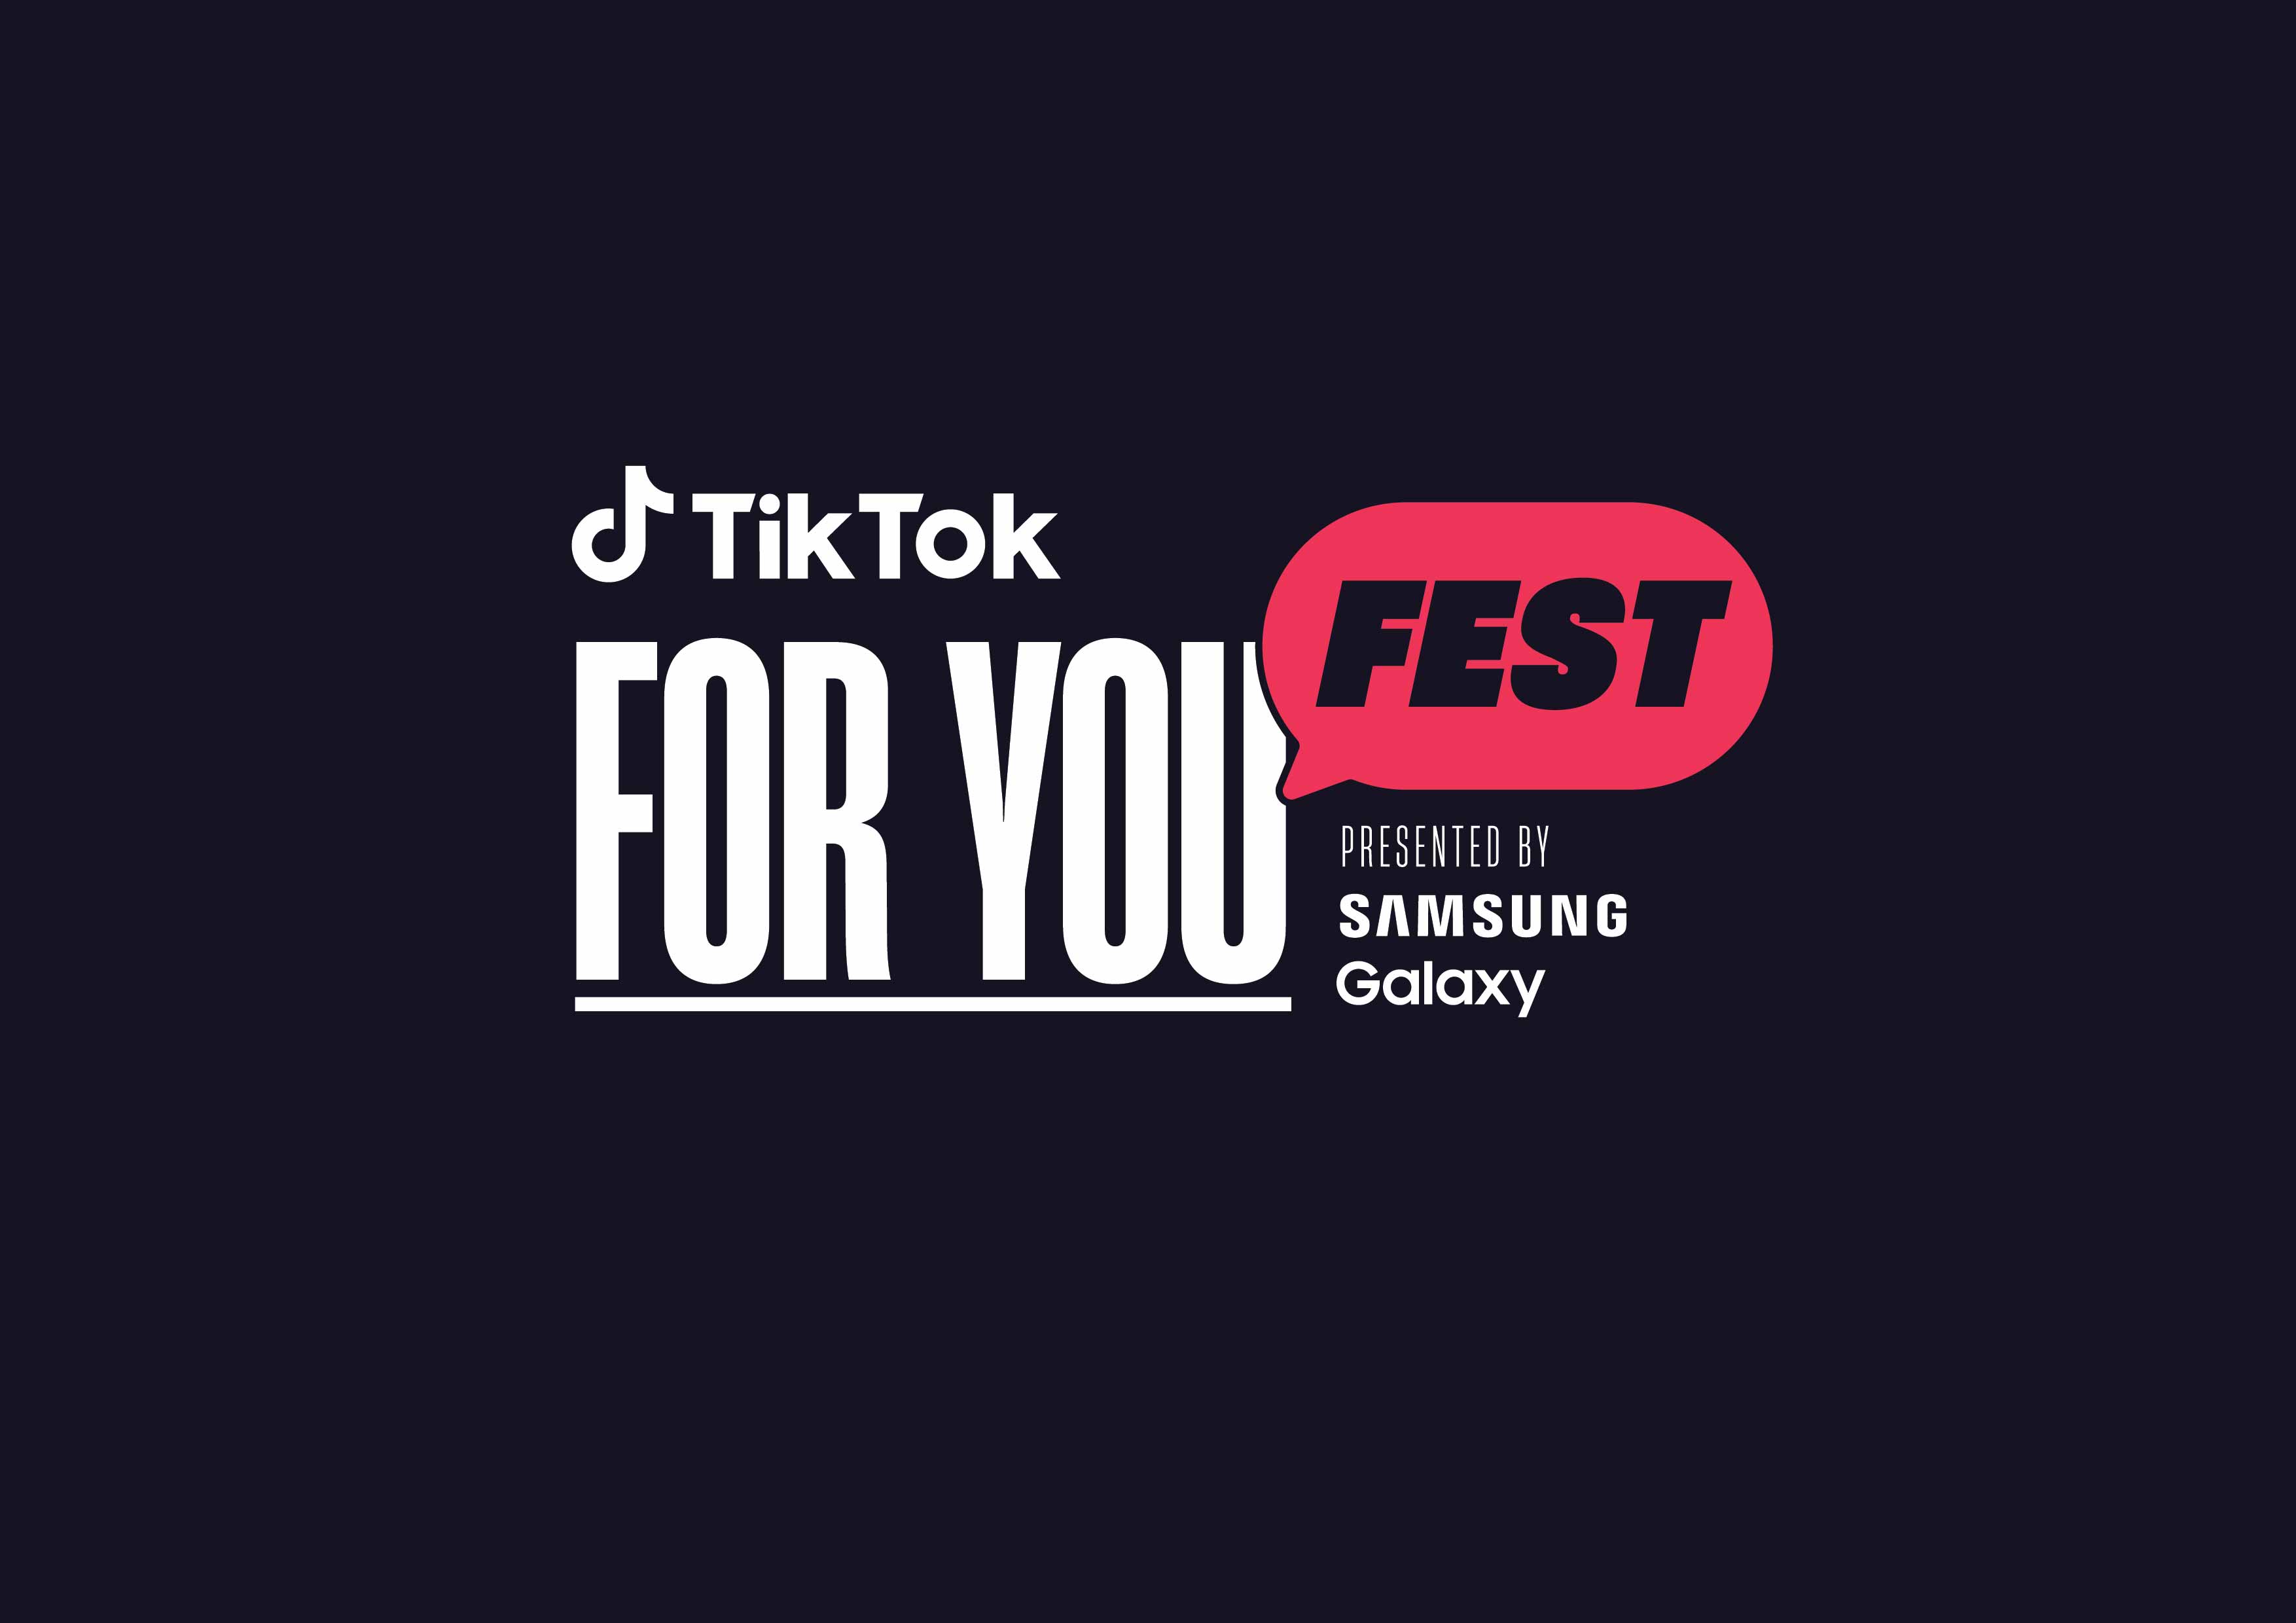 TikTok celebrates 2021 with starstudded live show to broadcast via app